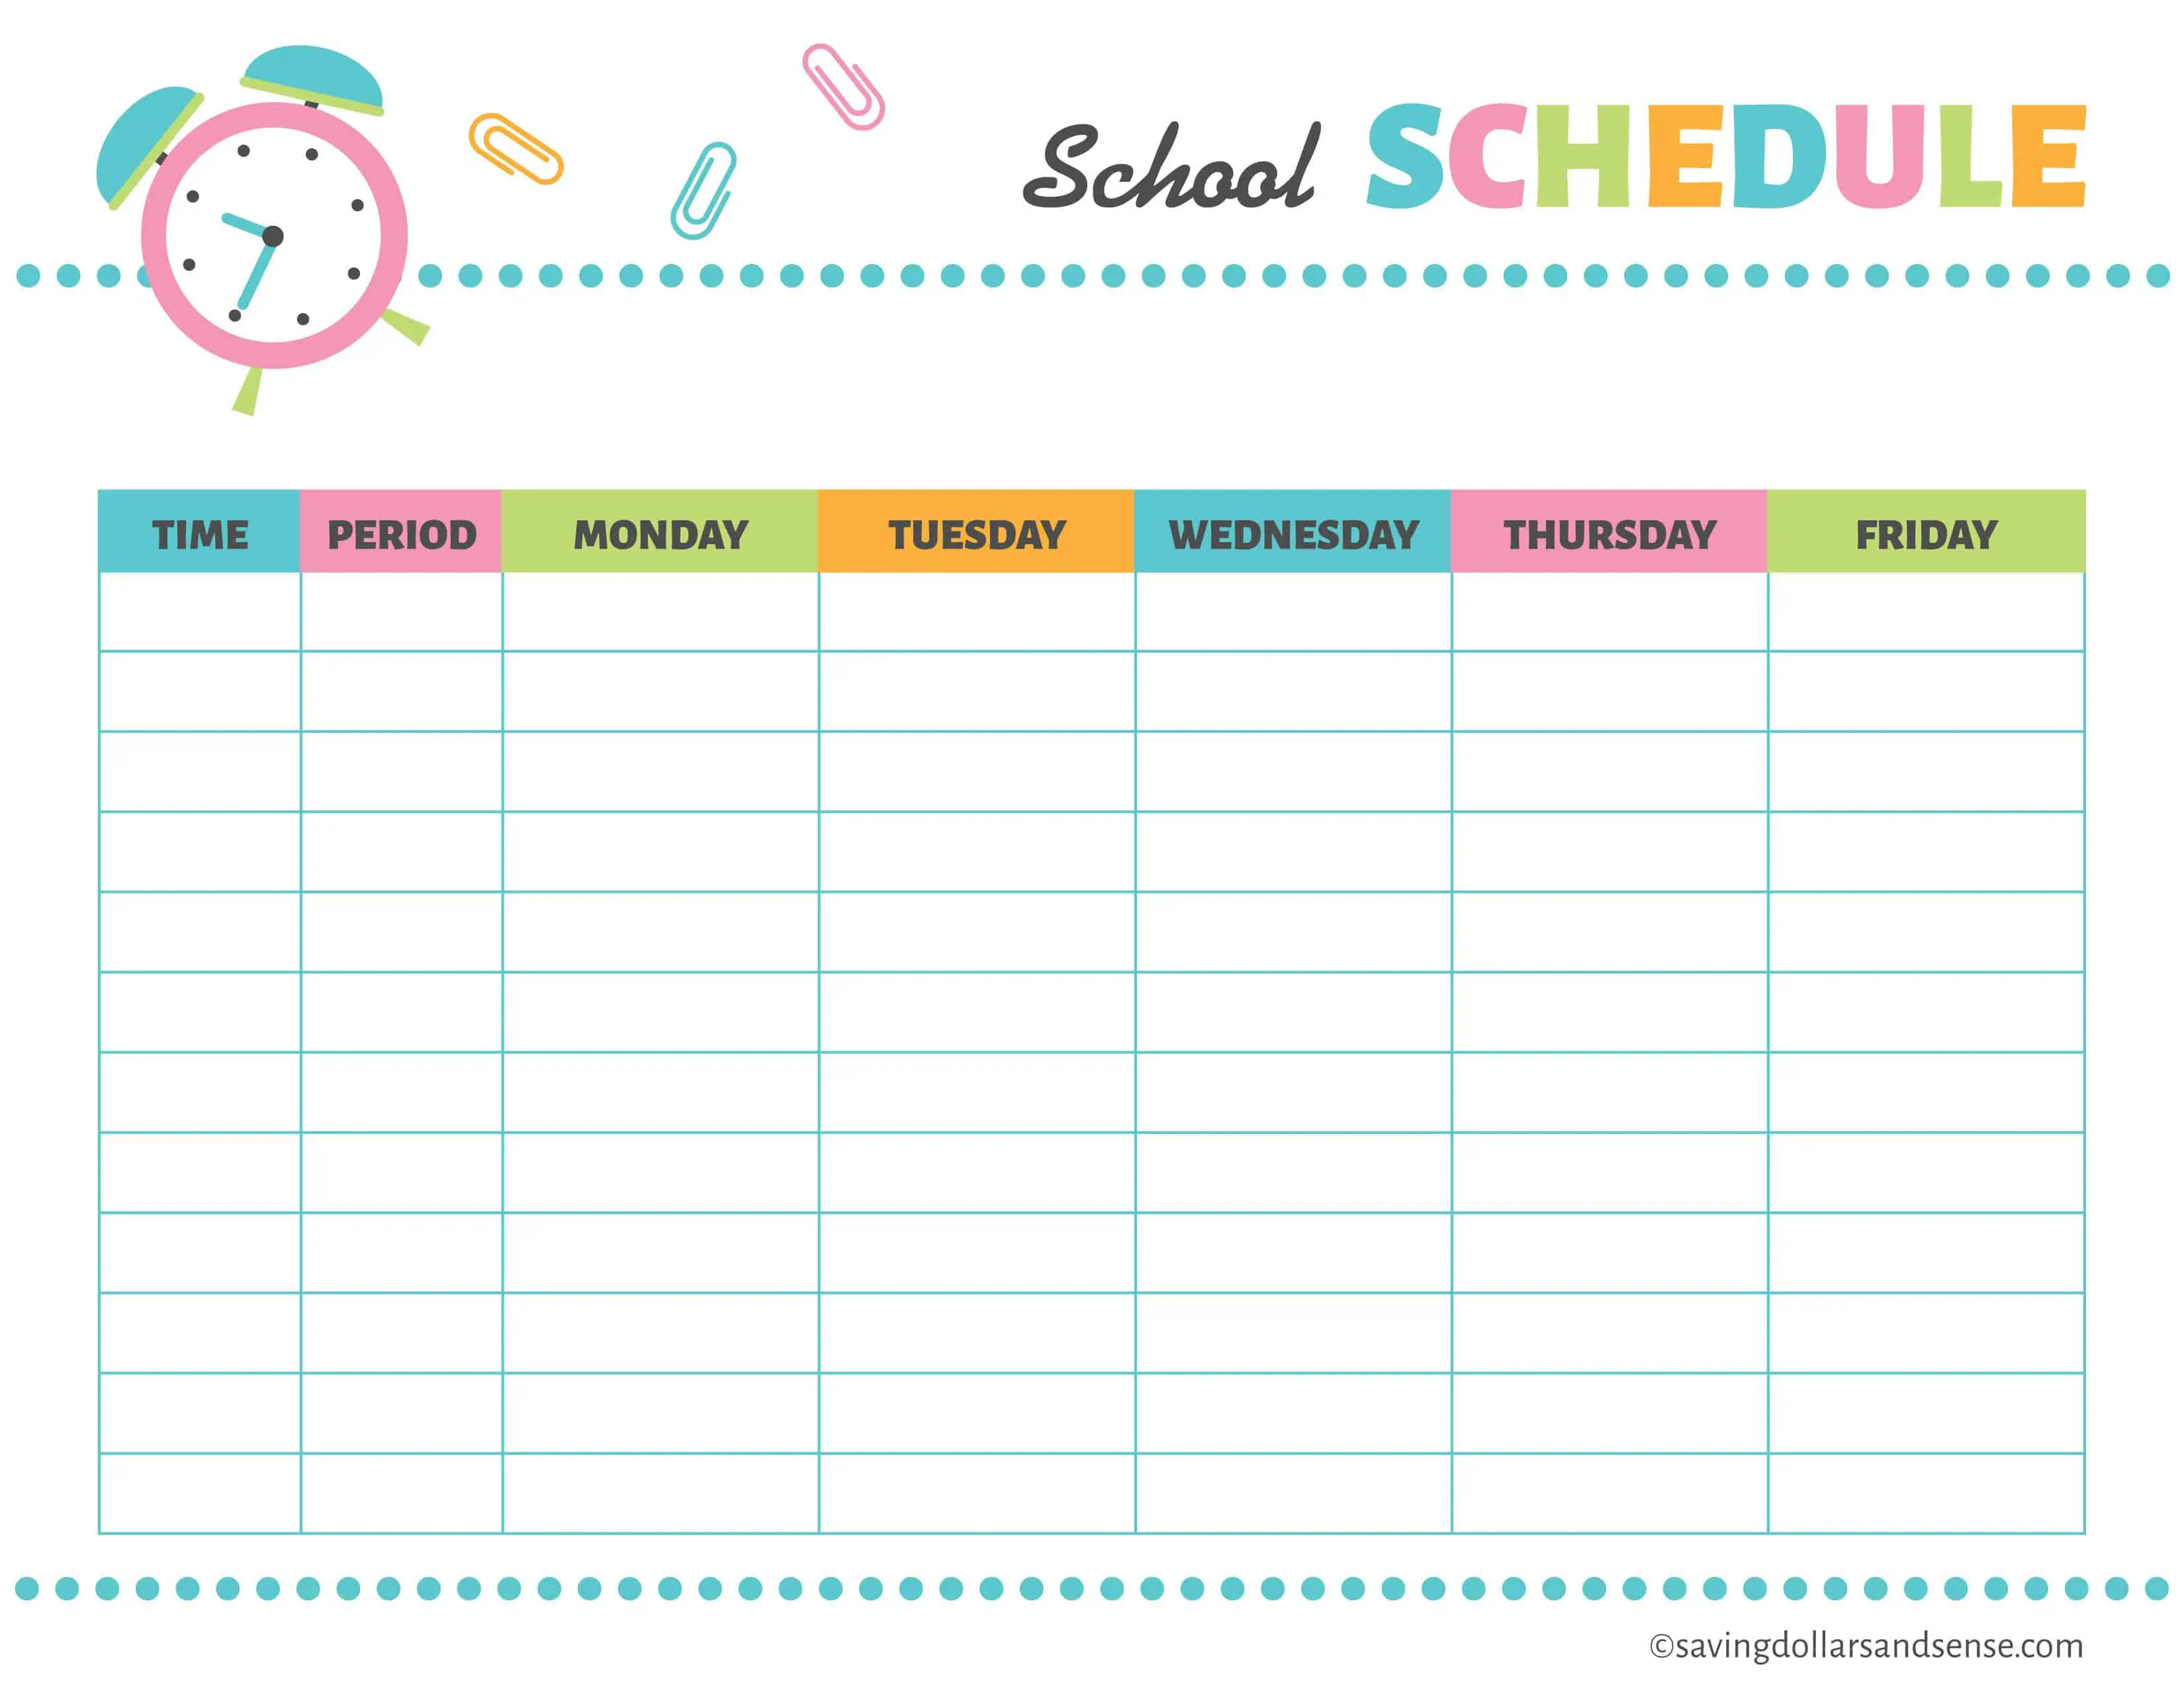 School schedule from the Printable School Planning Kit